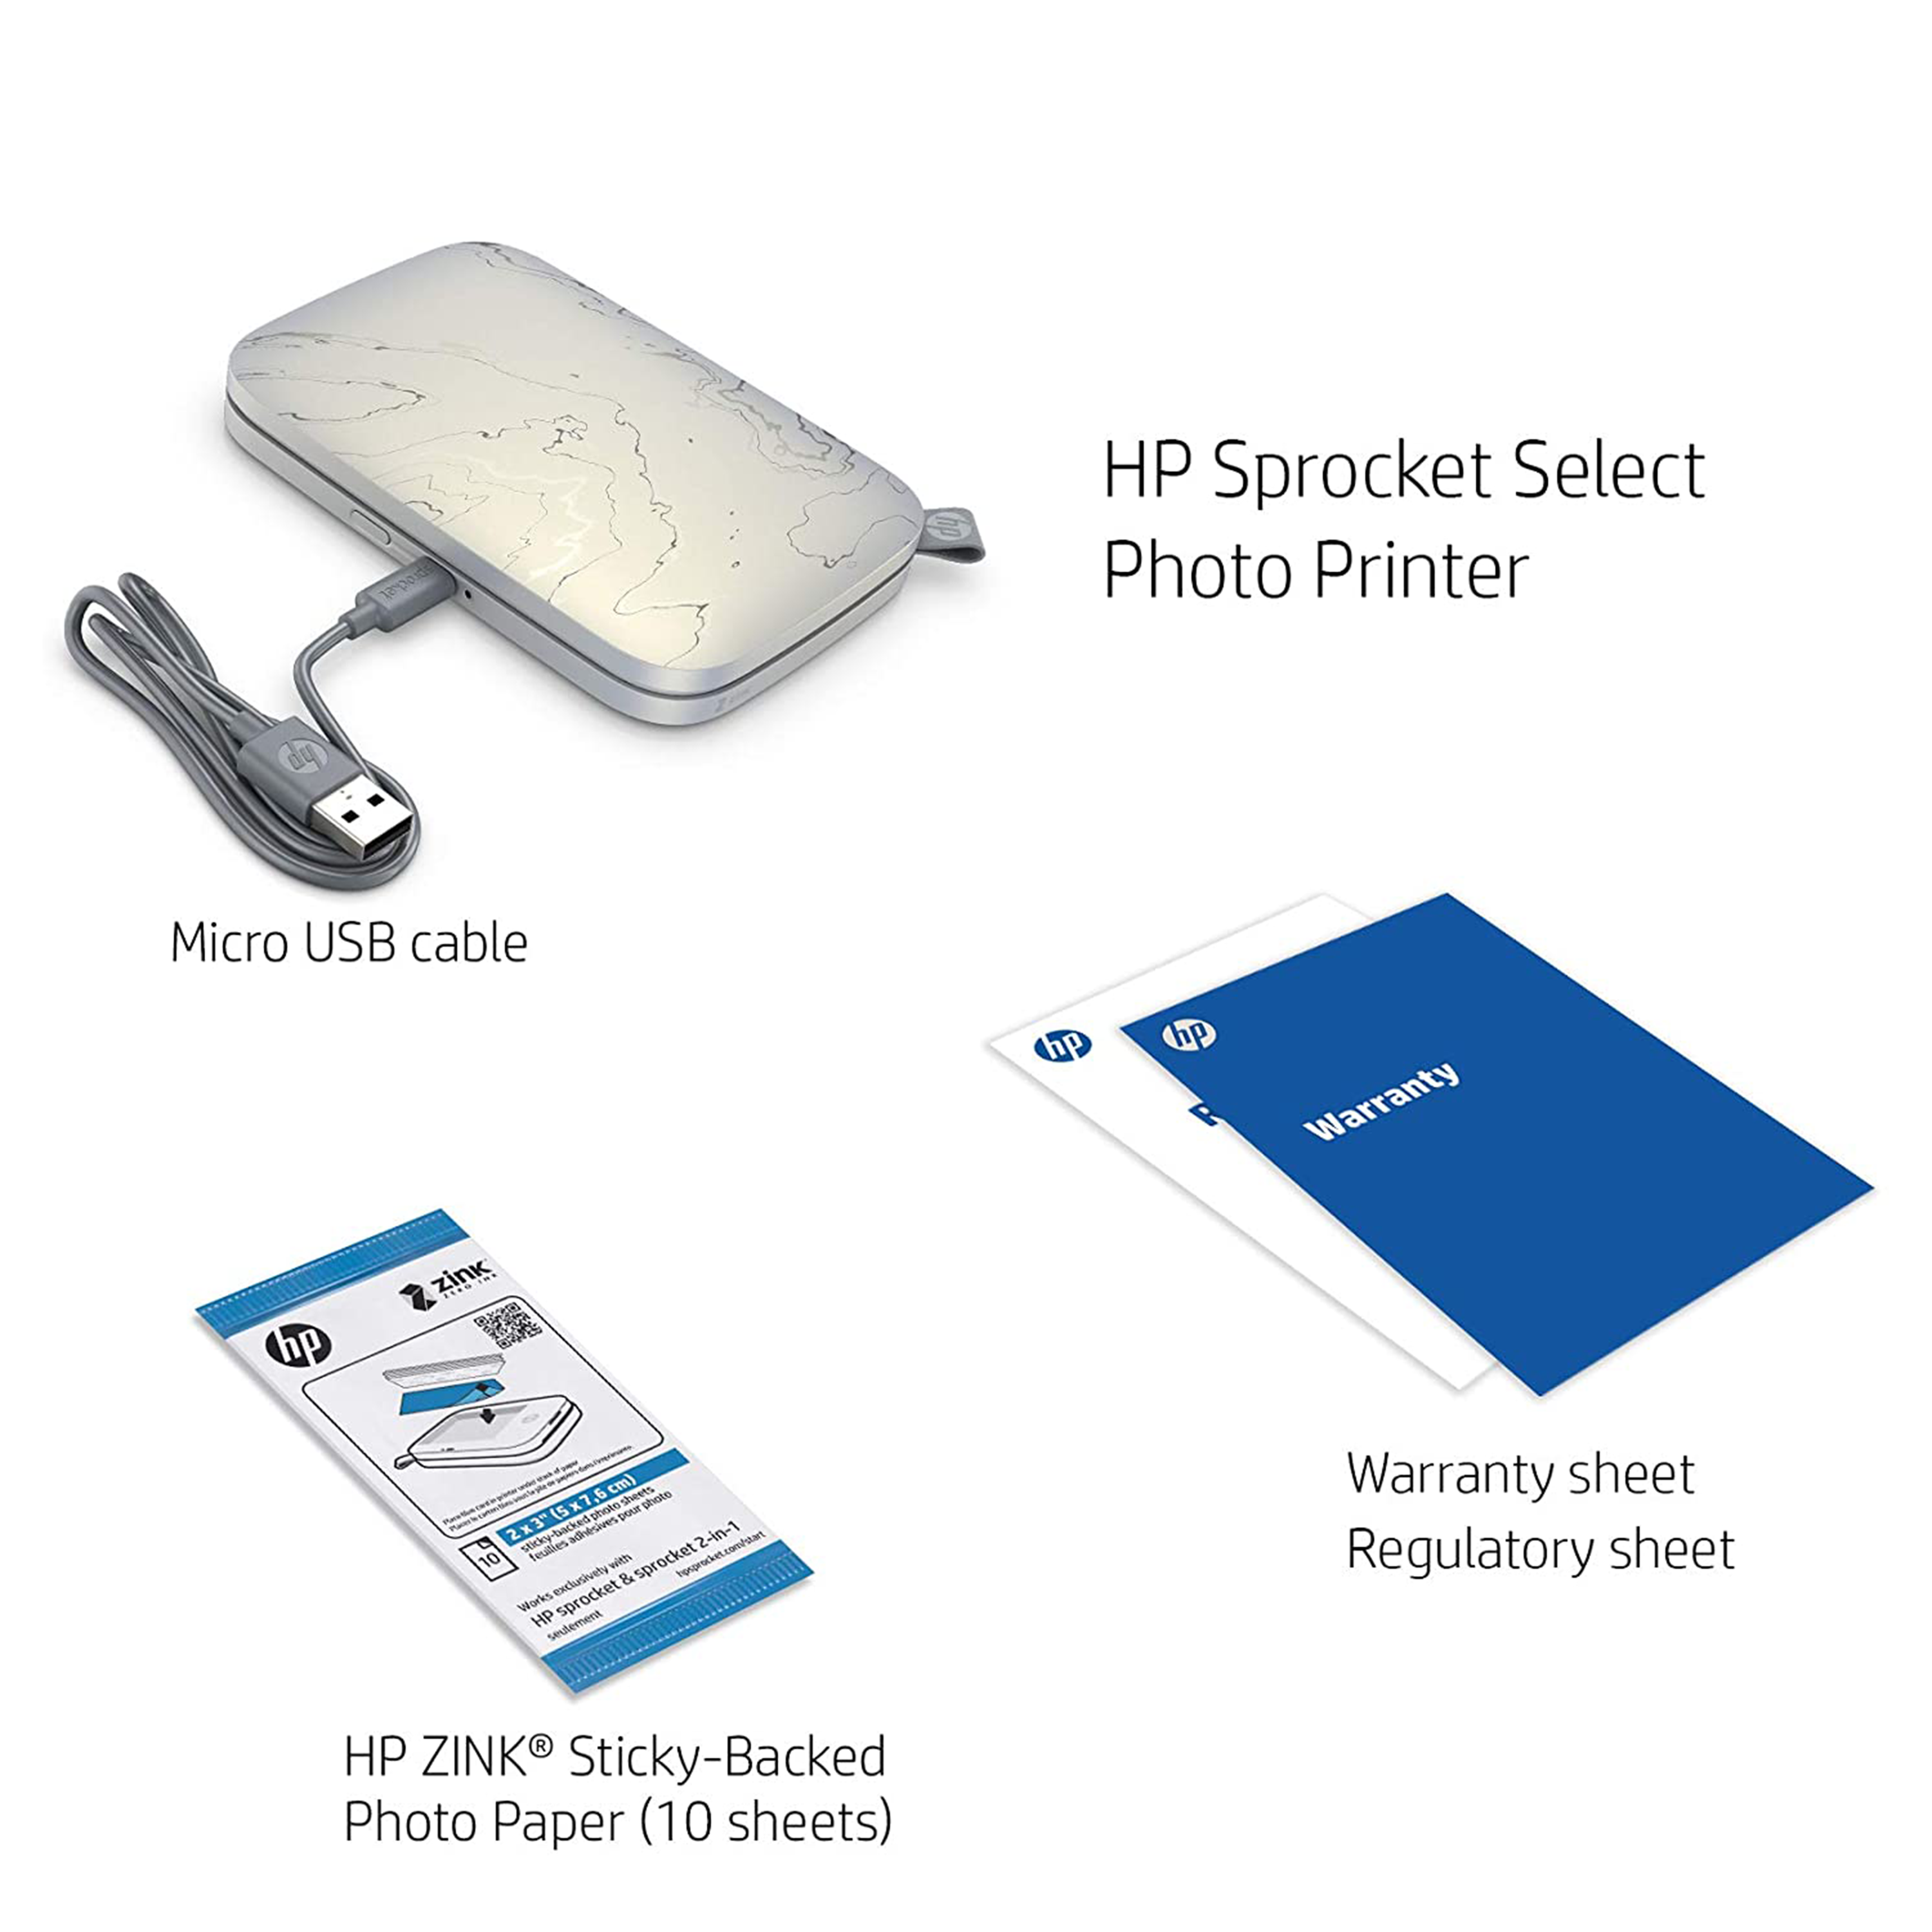 Comparer les prix : HP Sprocket Imprimante Photo Portable (Rose